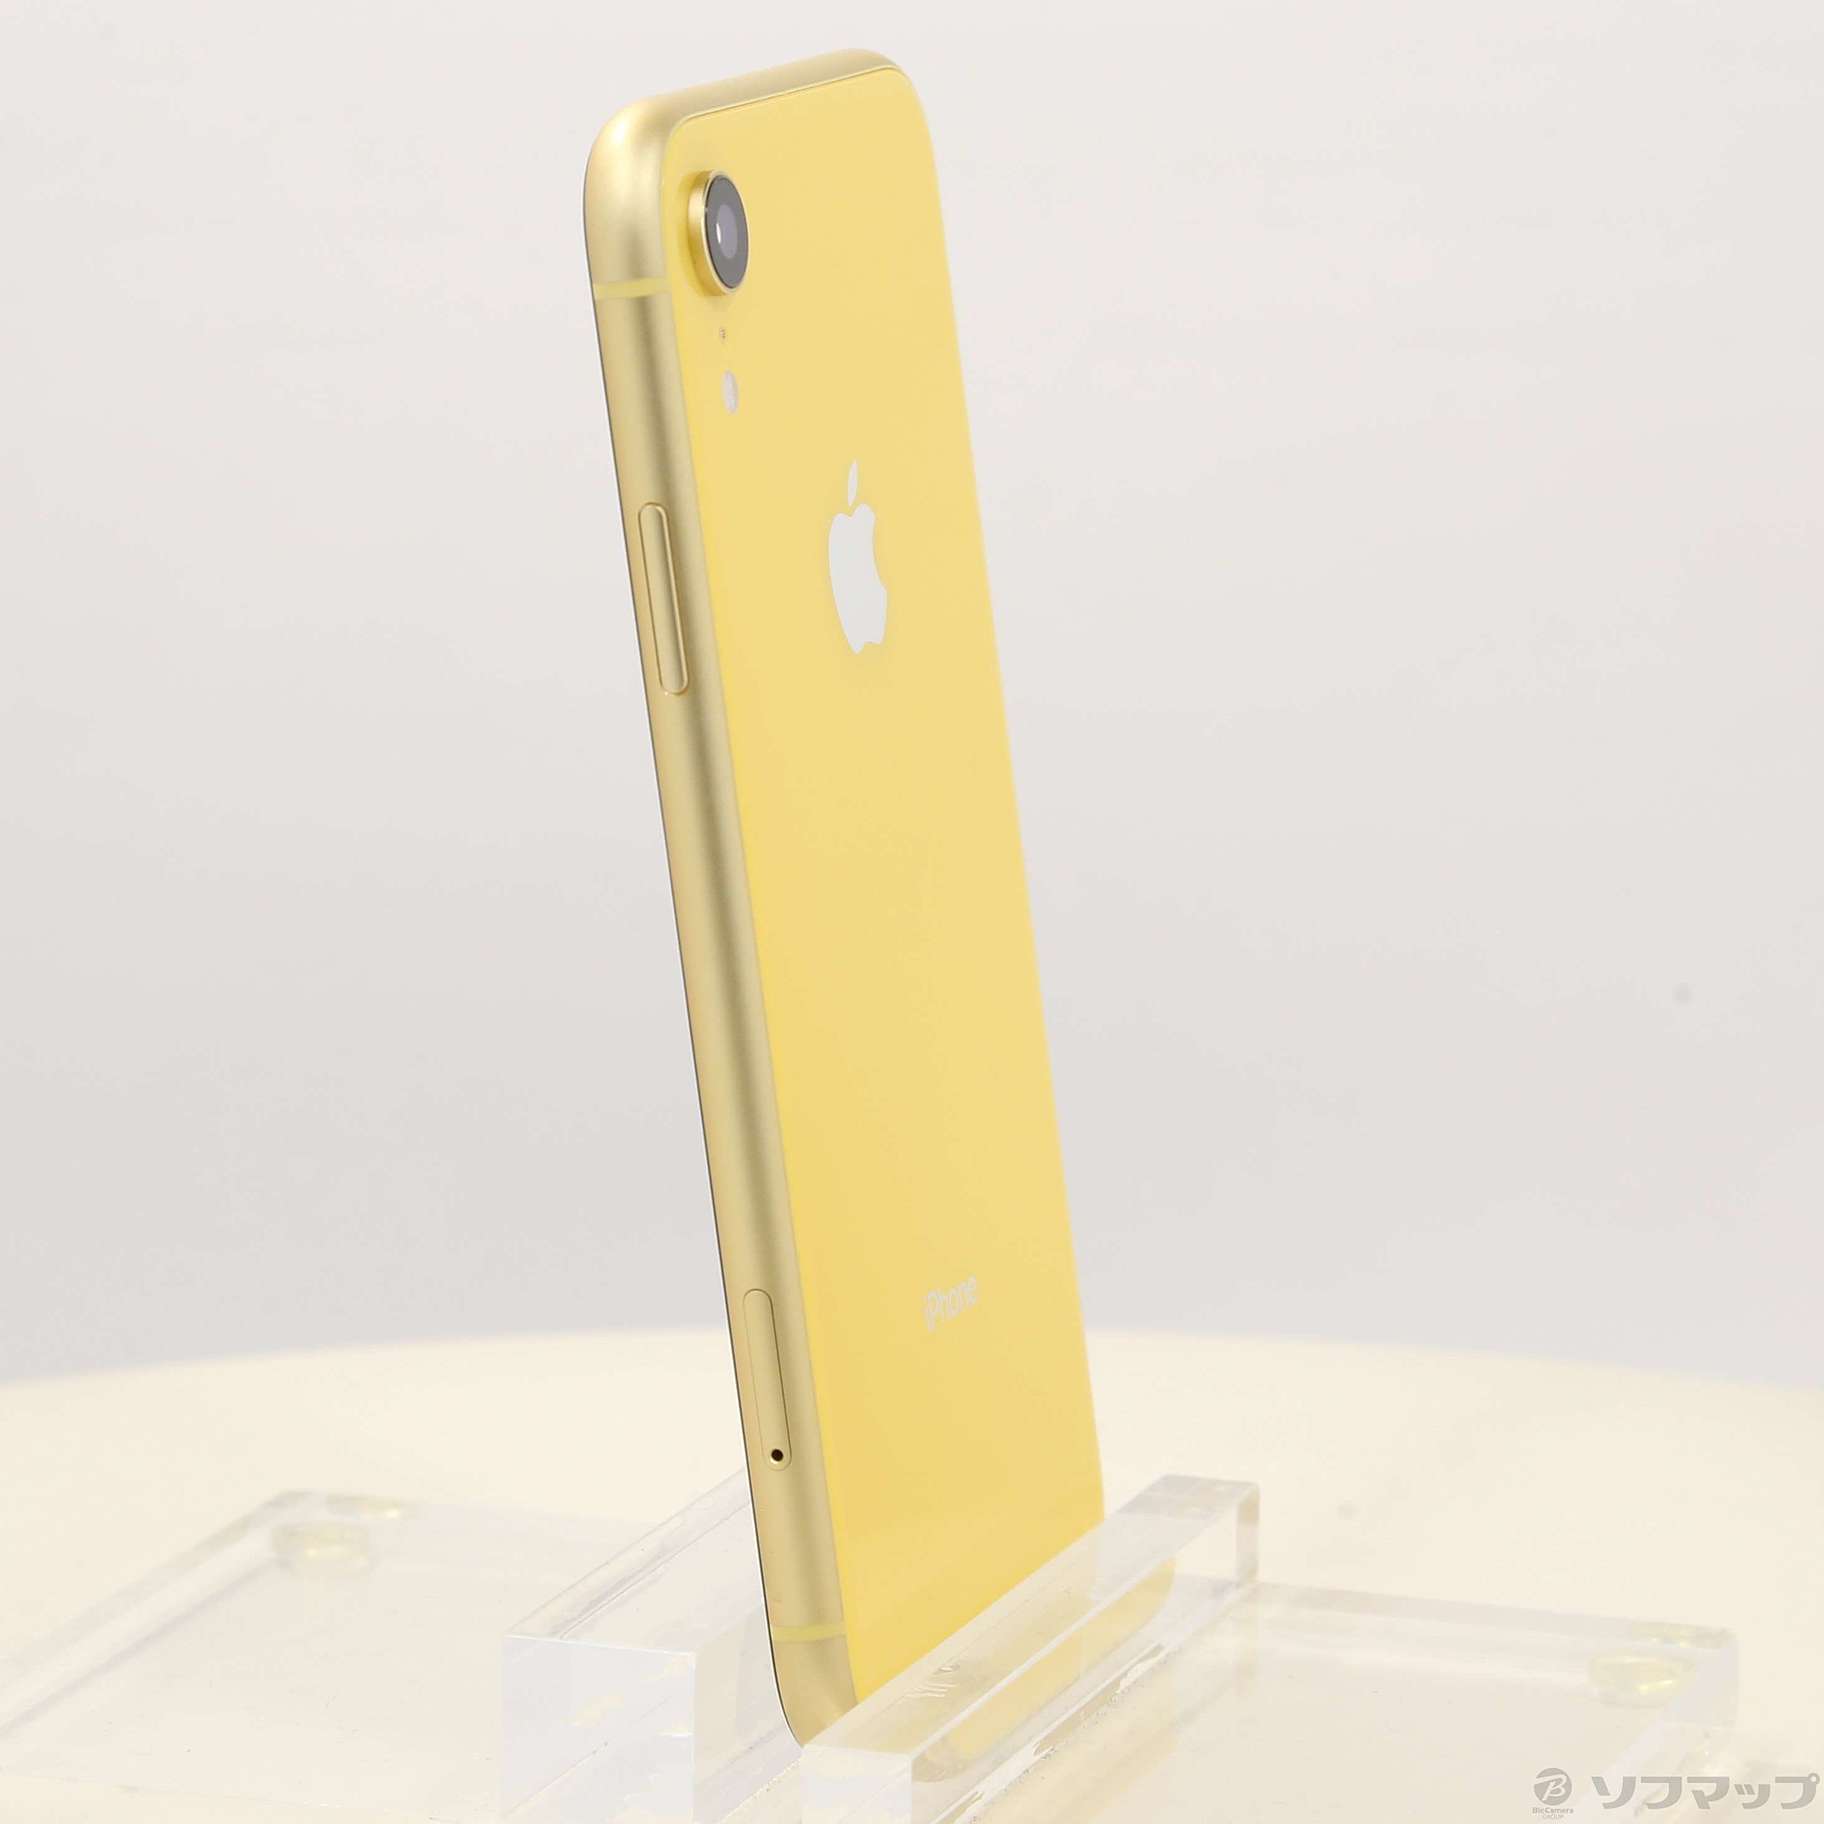 iPhone XR Yellow 64 GB Softbank-